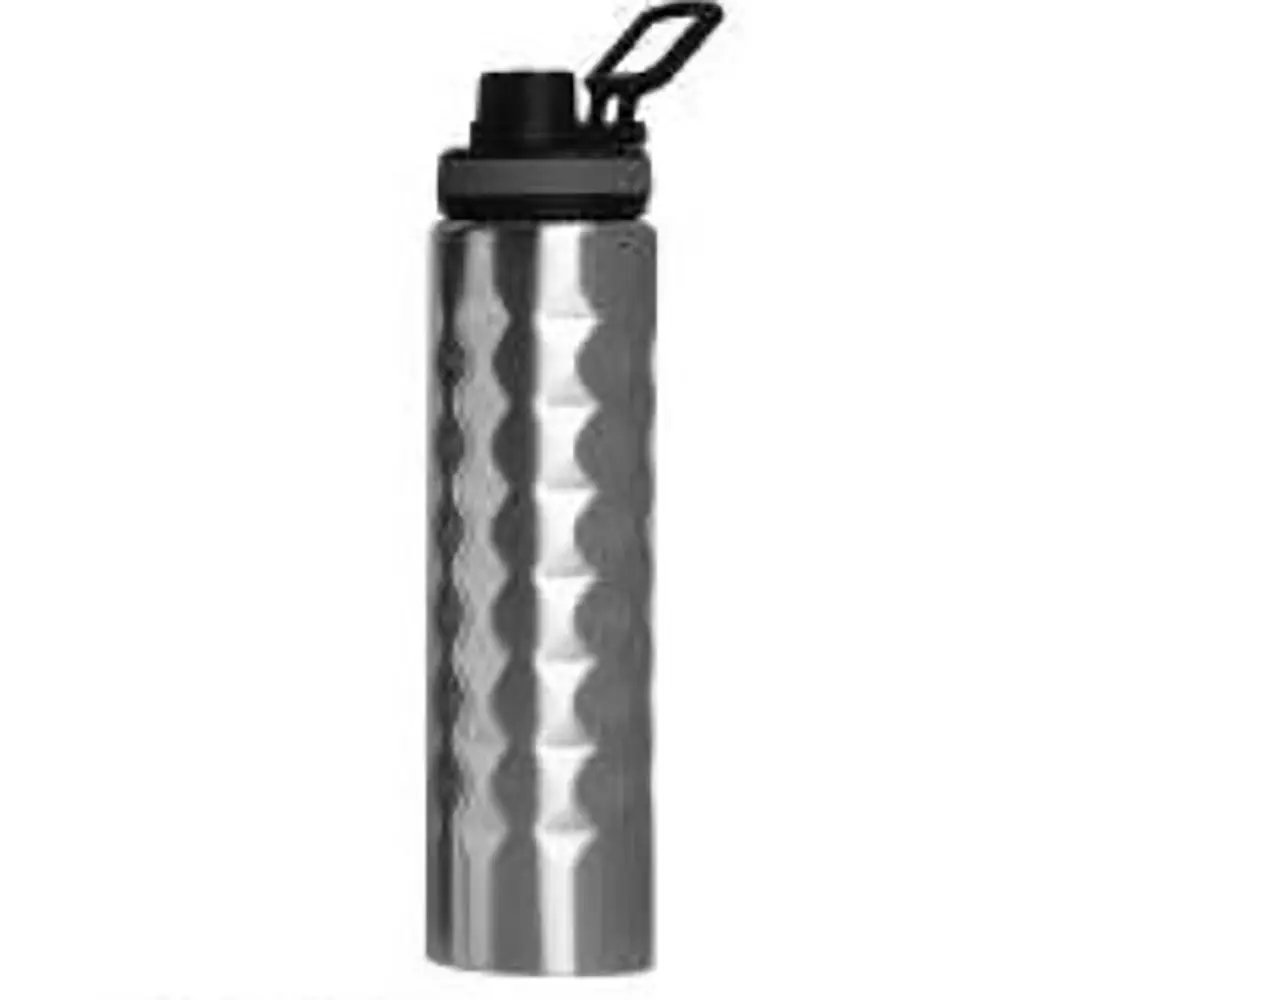 Stainless steel water bottle Diamond 1ltr plain ss cap. this stainless steel water bottle is very useful for us